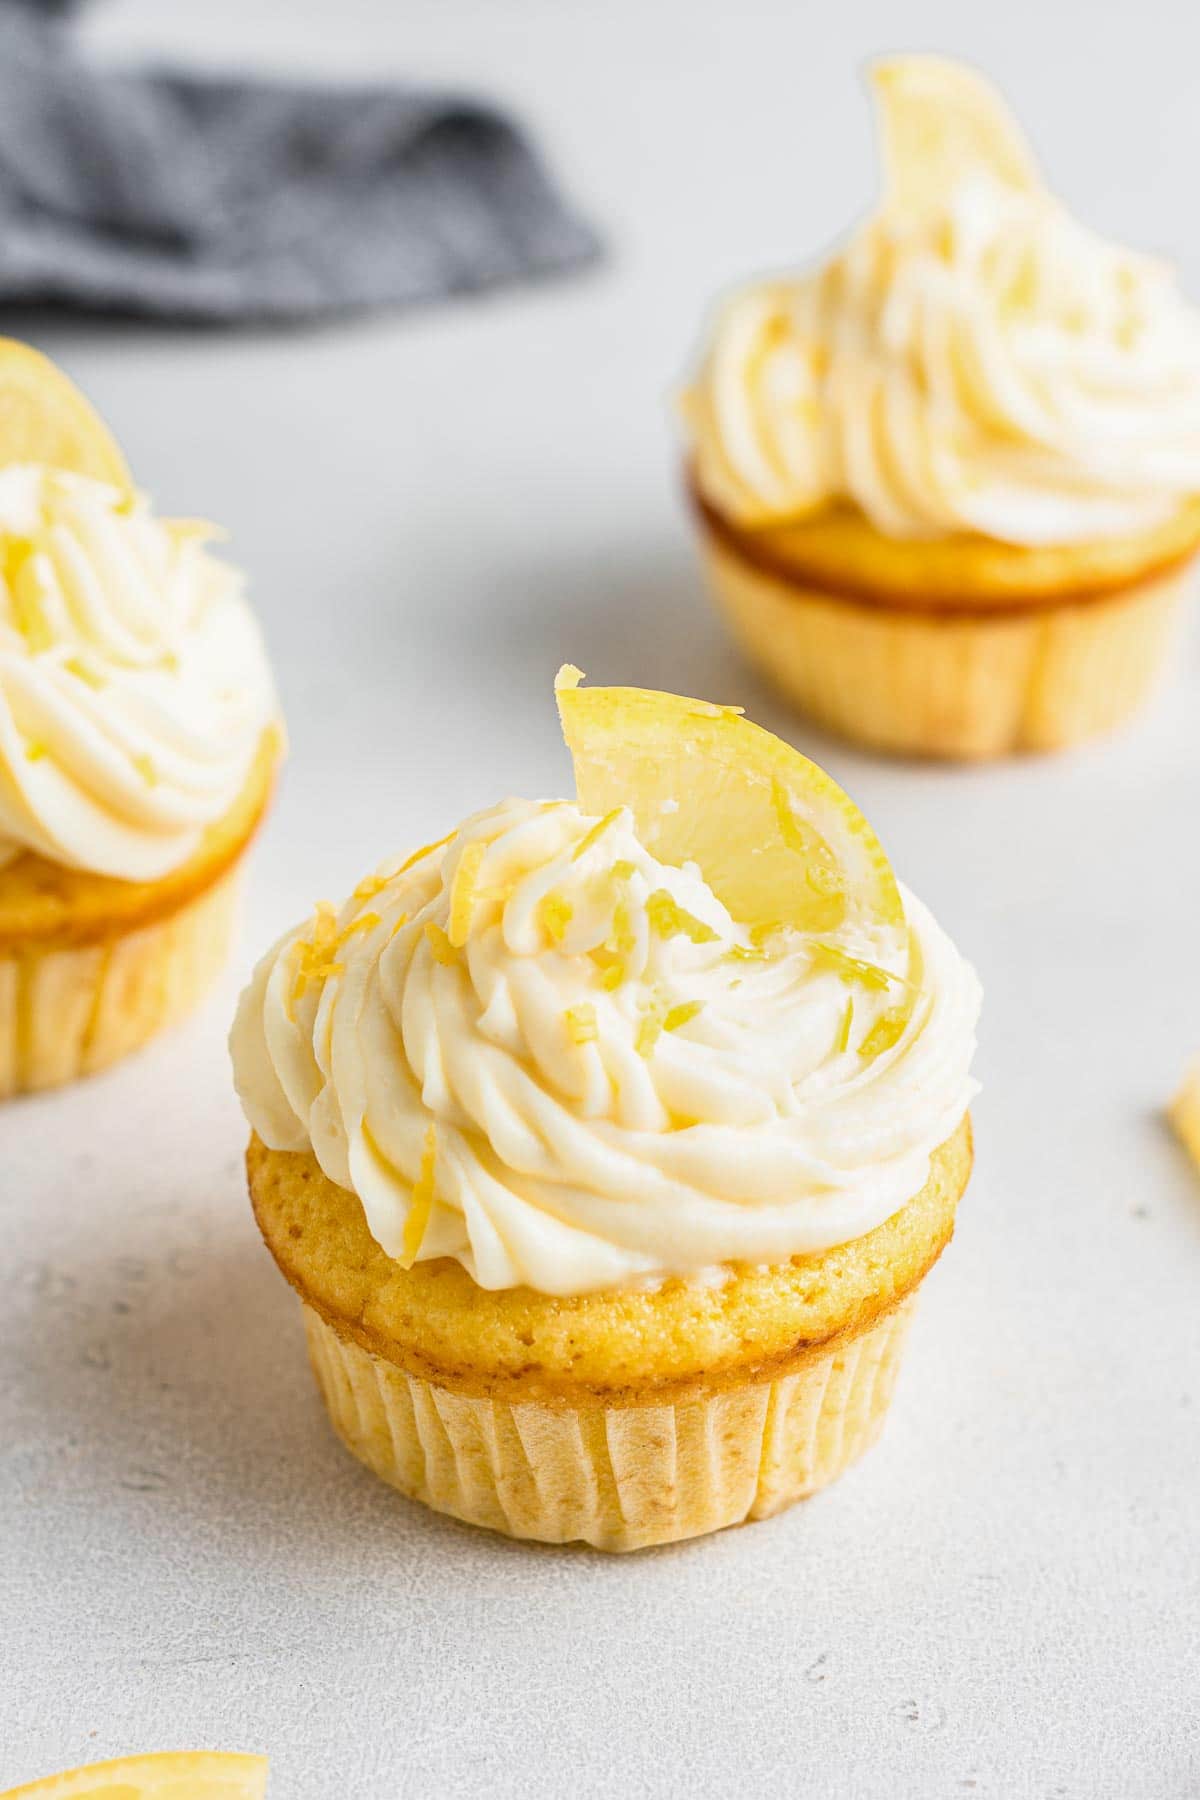 Lemon cream cheese frosting swirled on a cupcake with lemon slice.